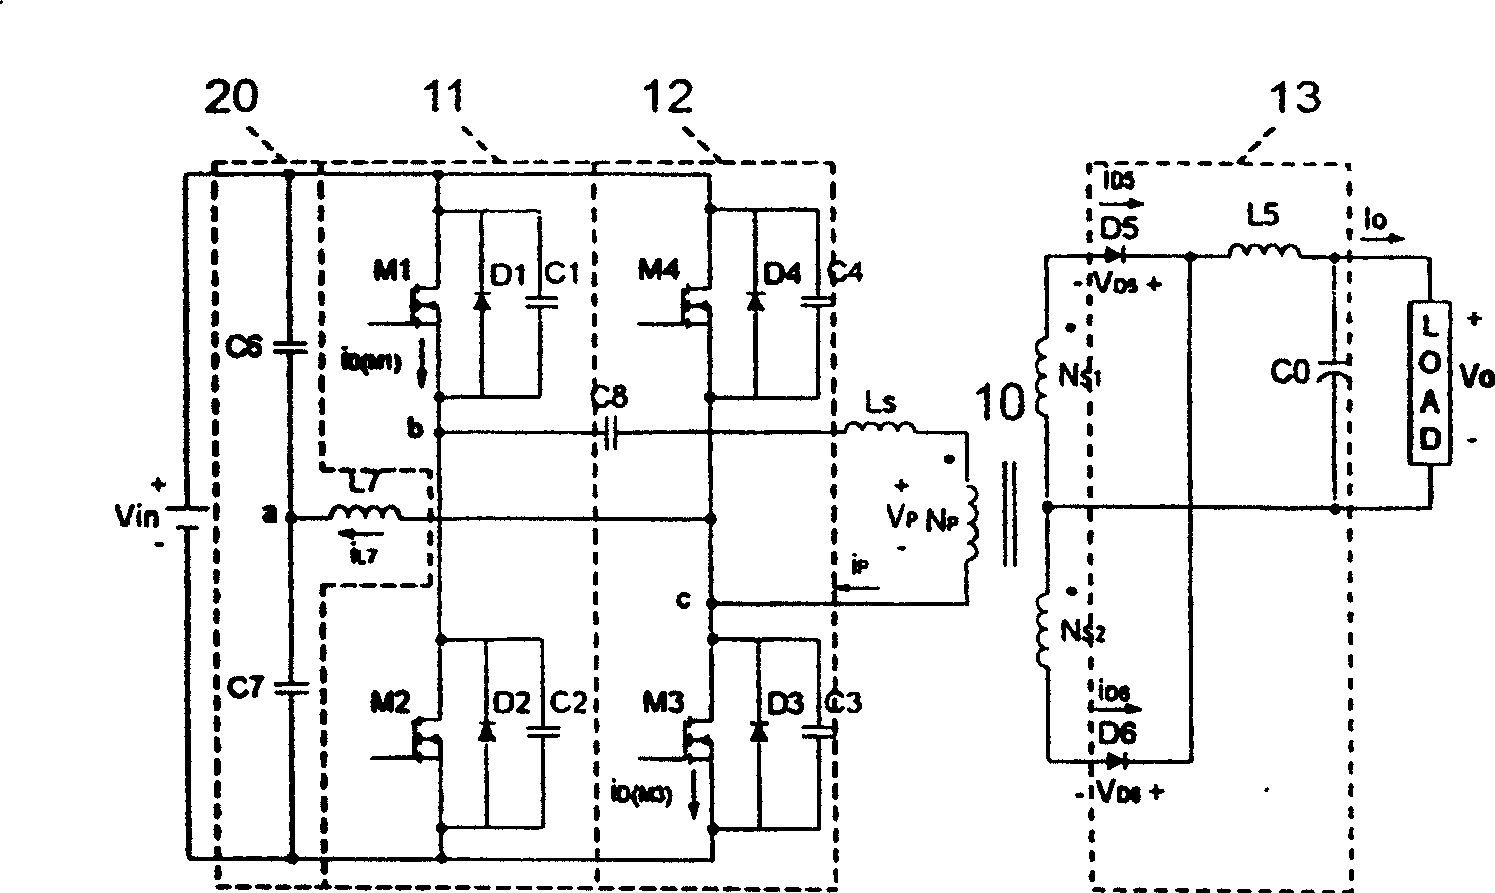 Soft switching phase-shift full bridge circuit